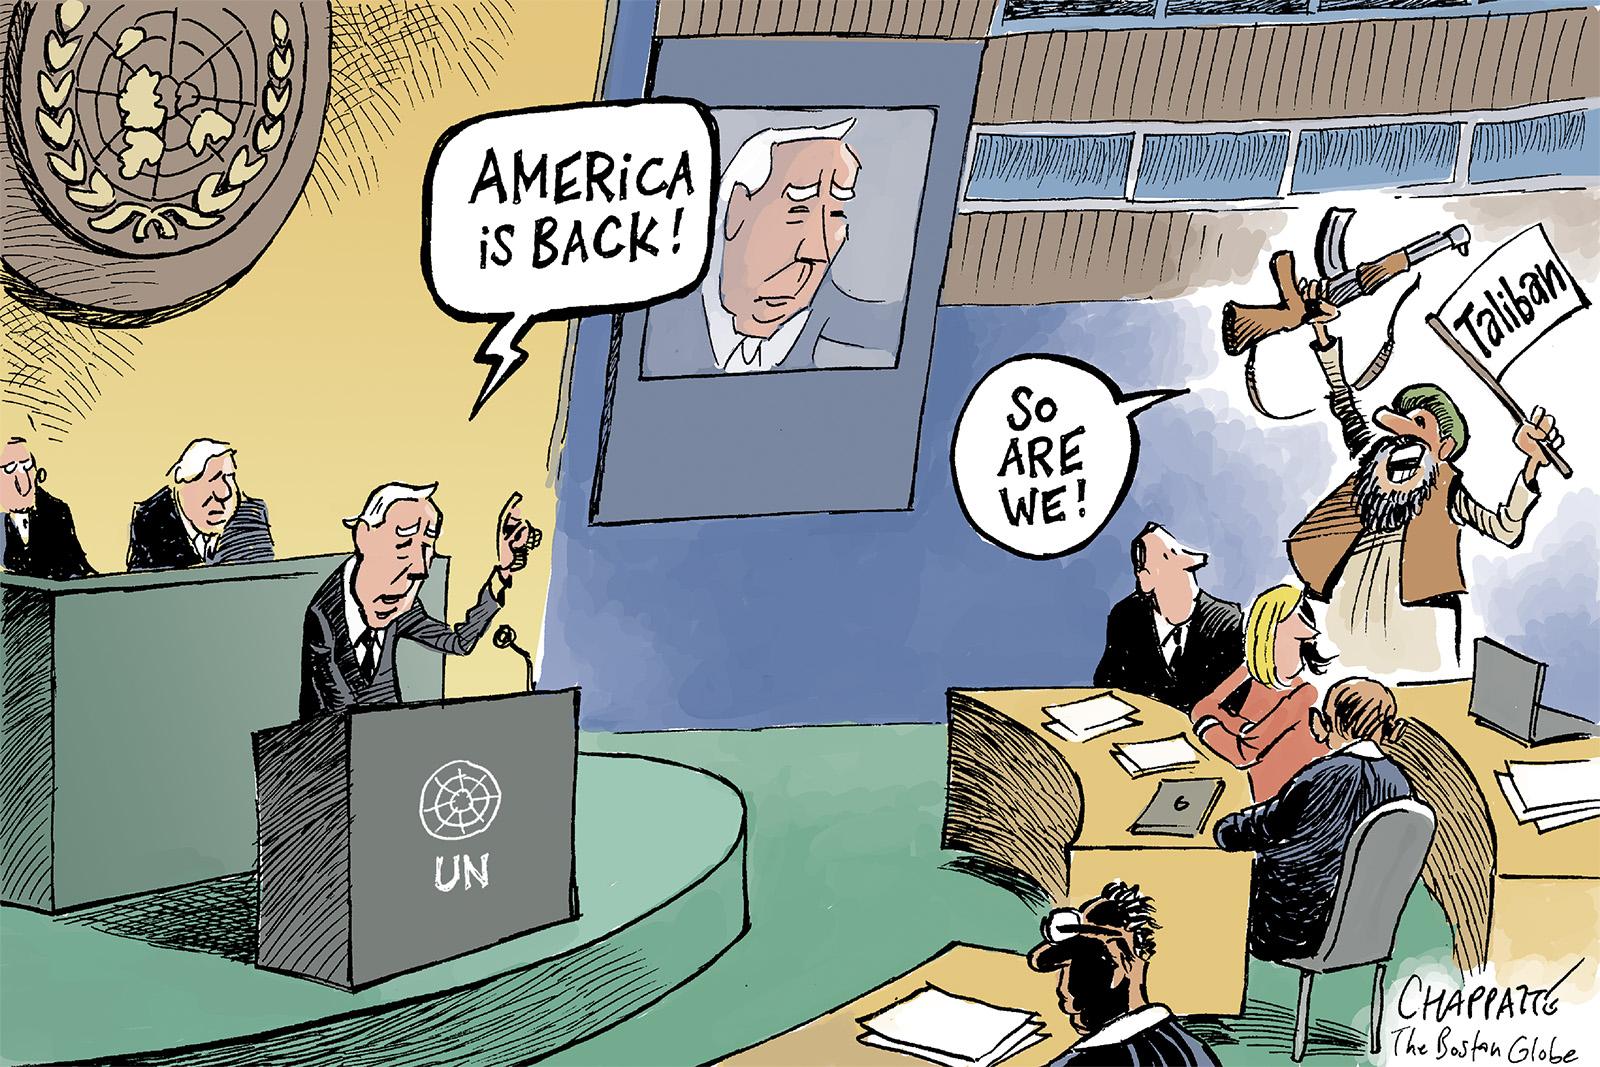 Joe Biden at the UN